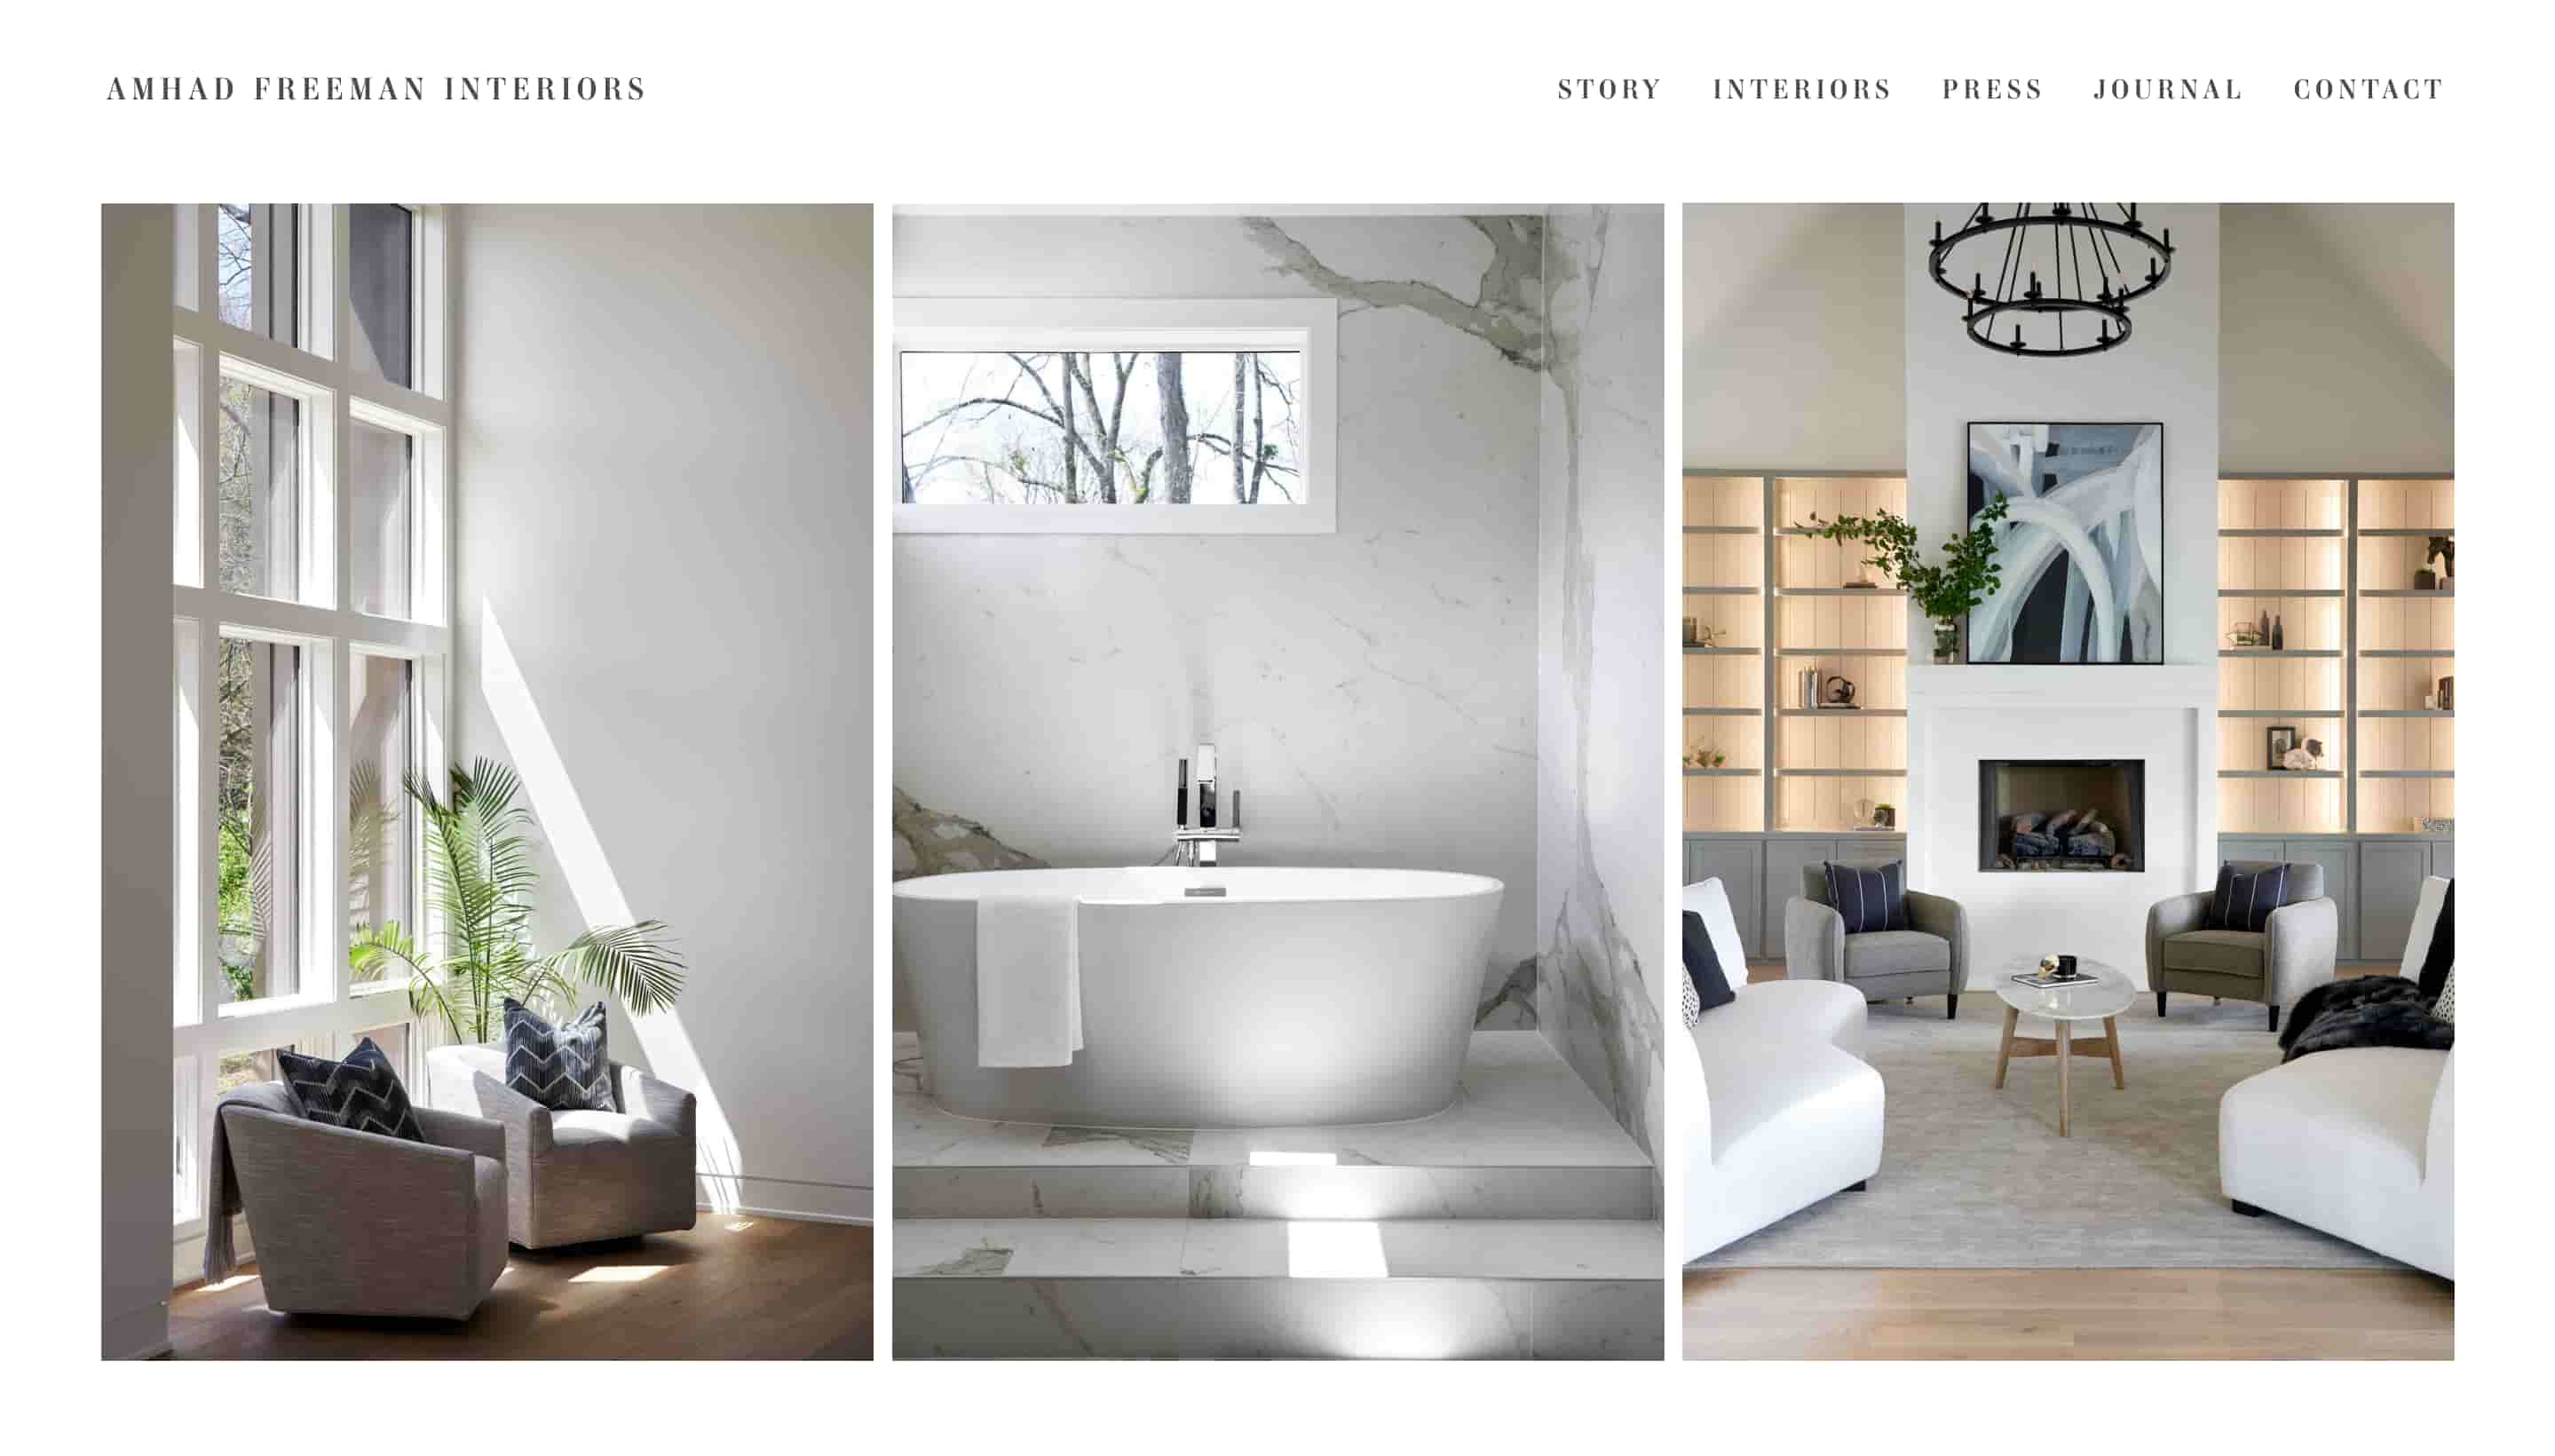 interior design websites: amhad freeman interiors shows three beautiful interiors next to each other 